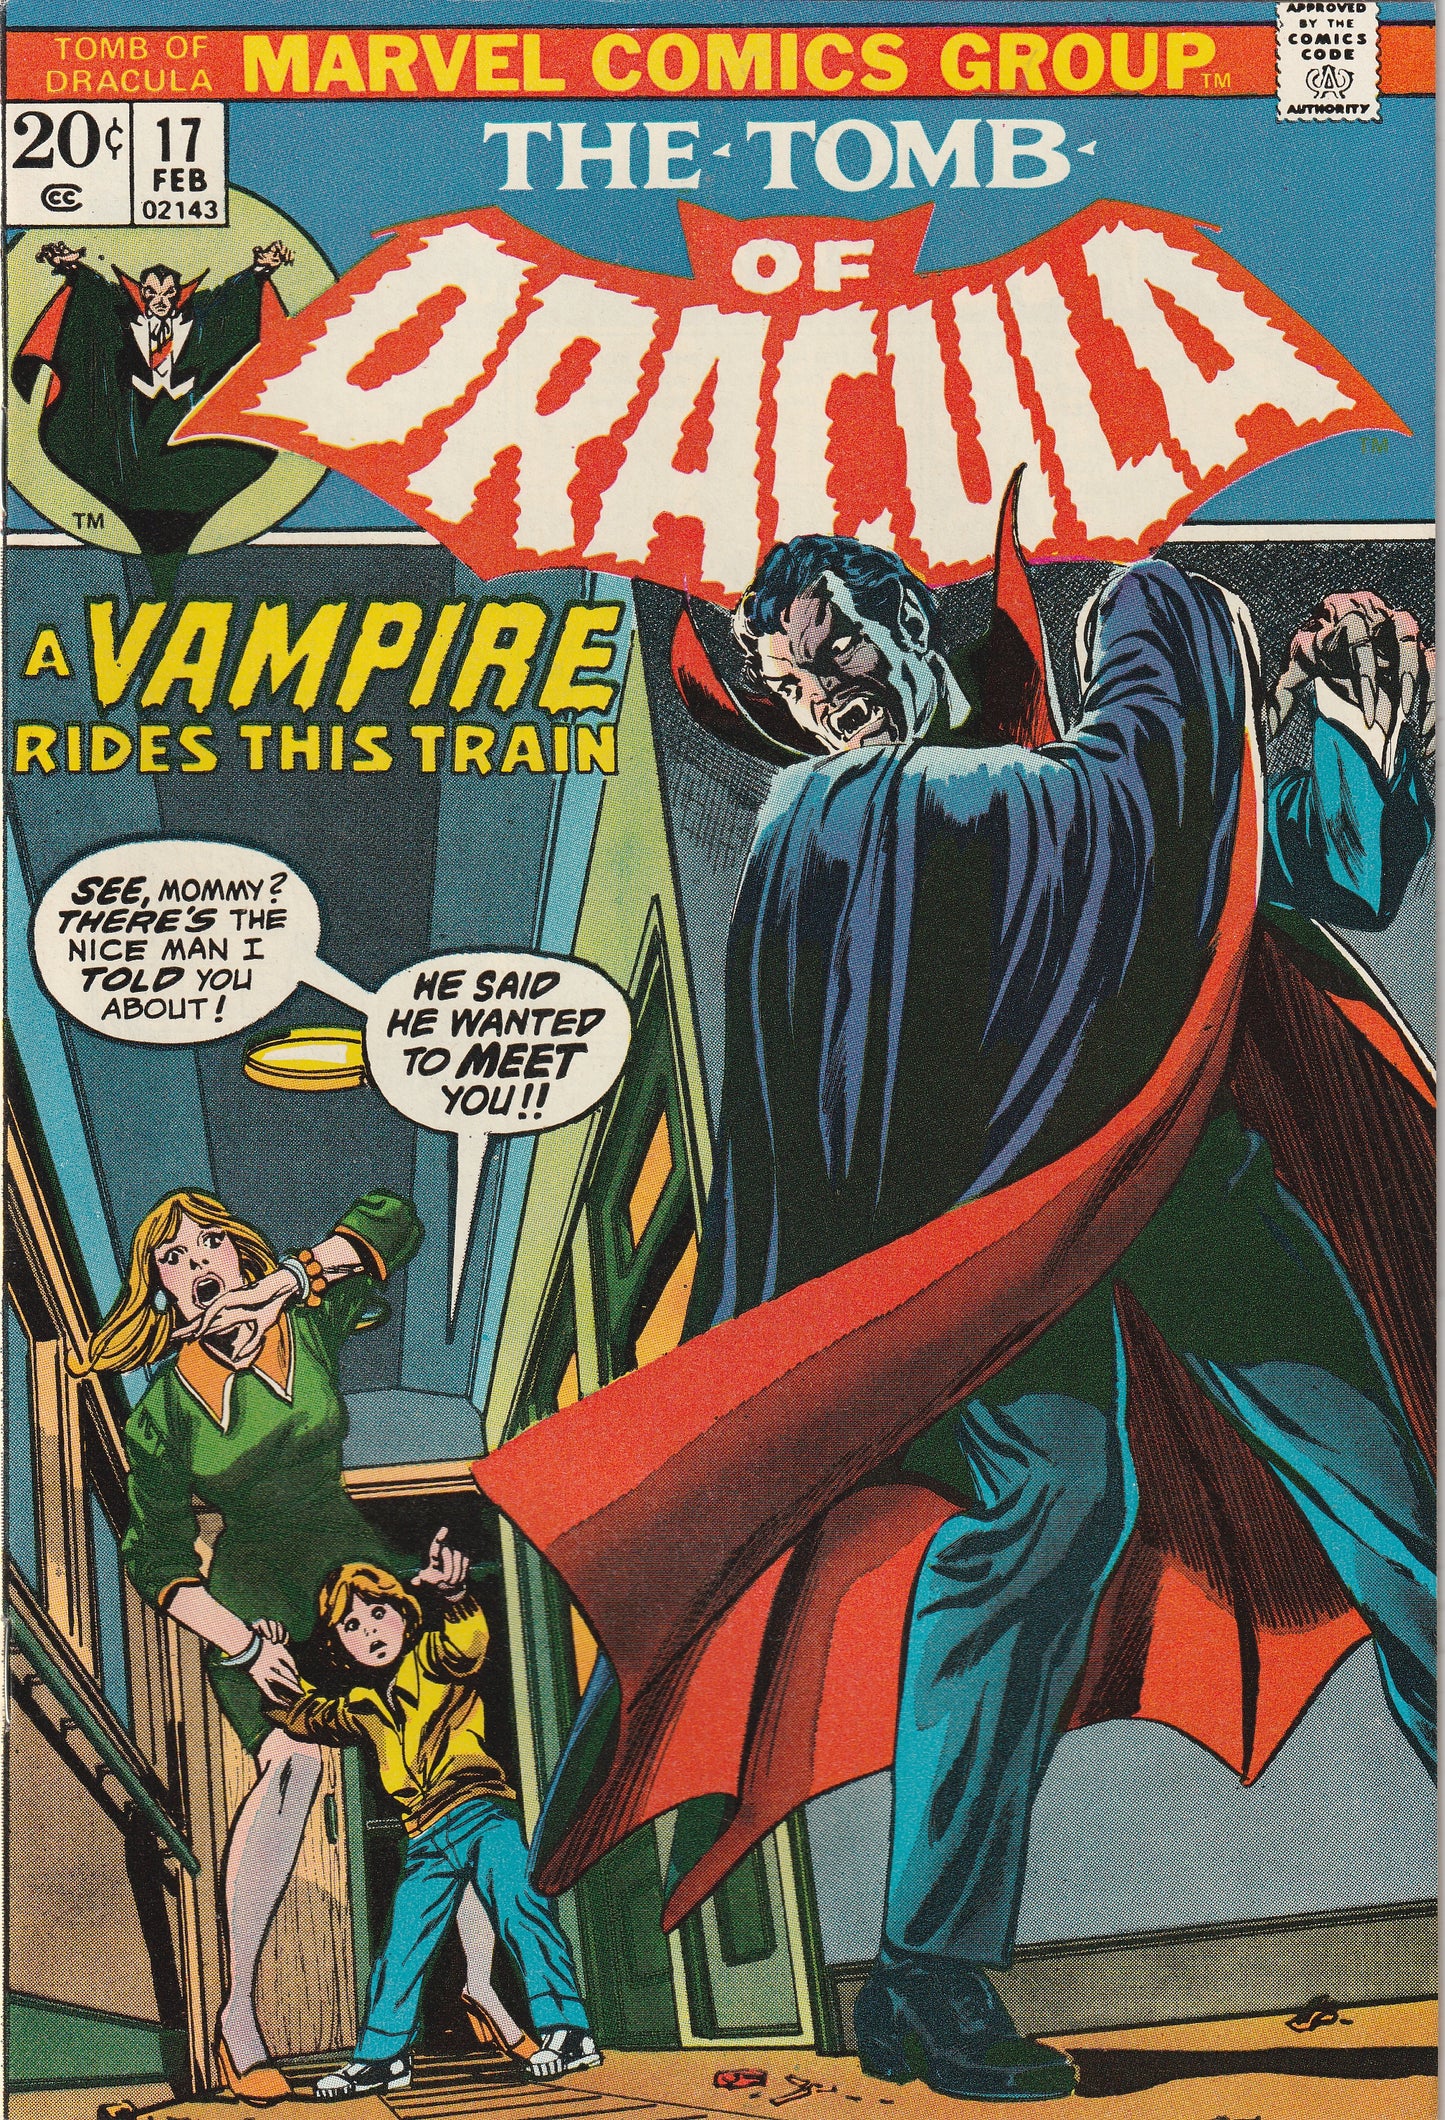 Tomb of Dracula #17 (1974) - Blade bitten by Dracula